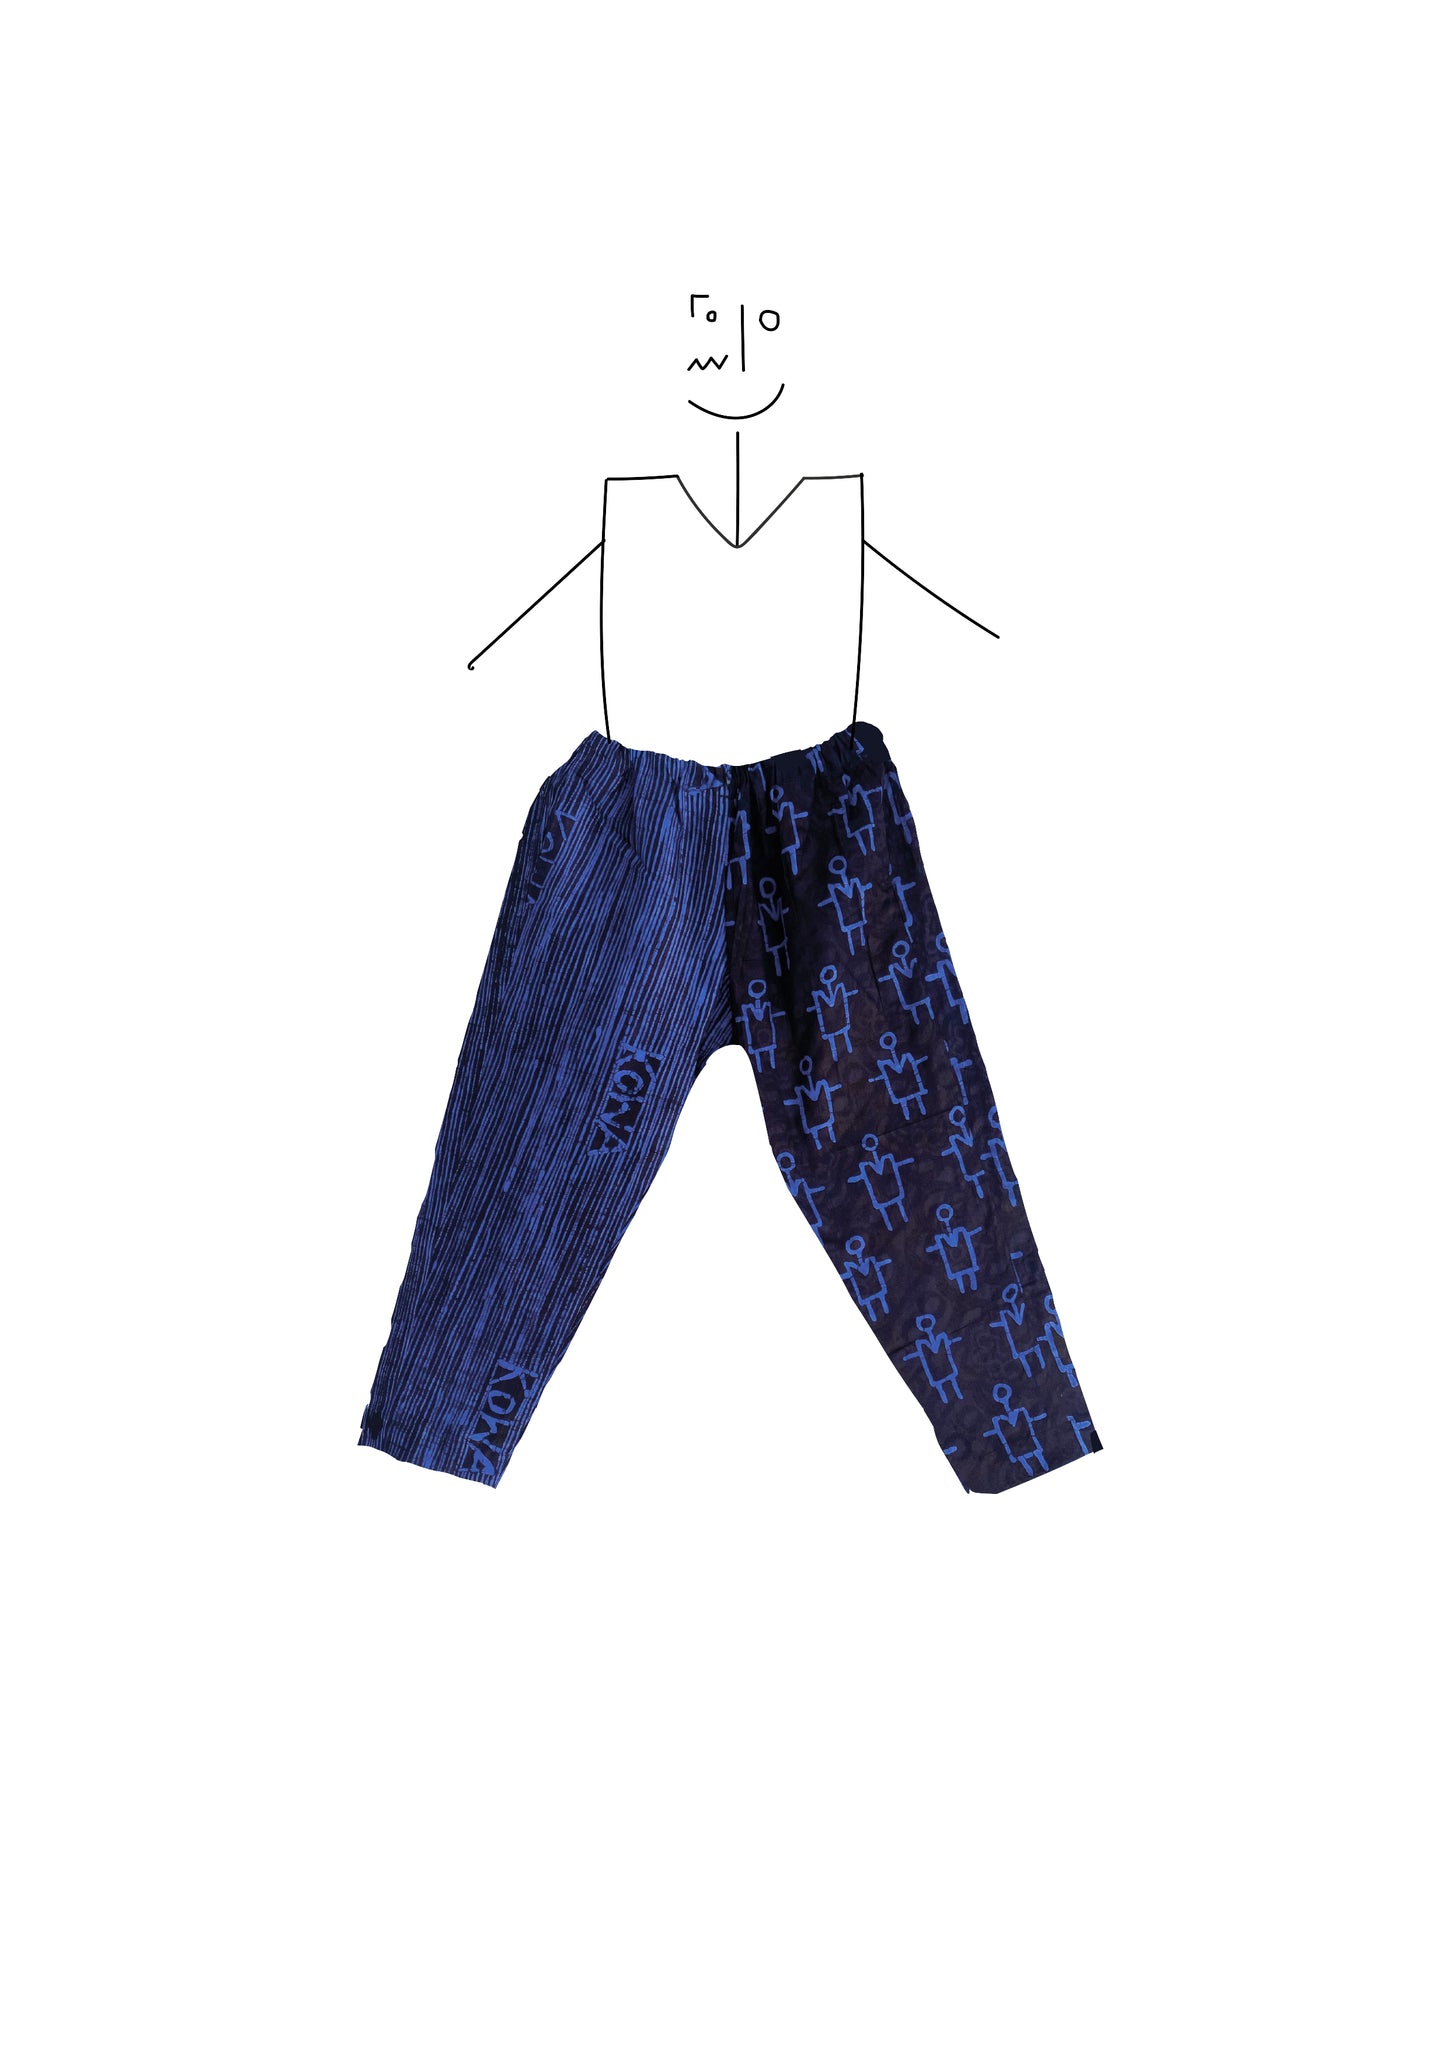 Trousers-  Half and Half Indigo and light blue